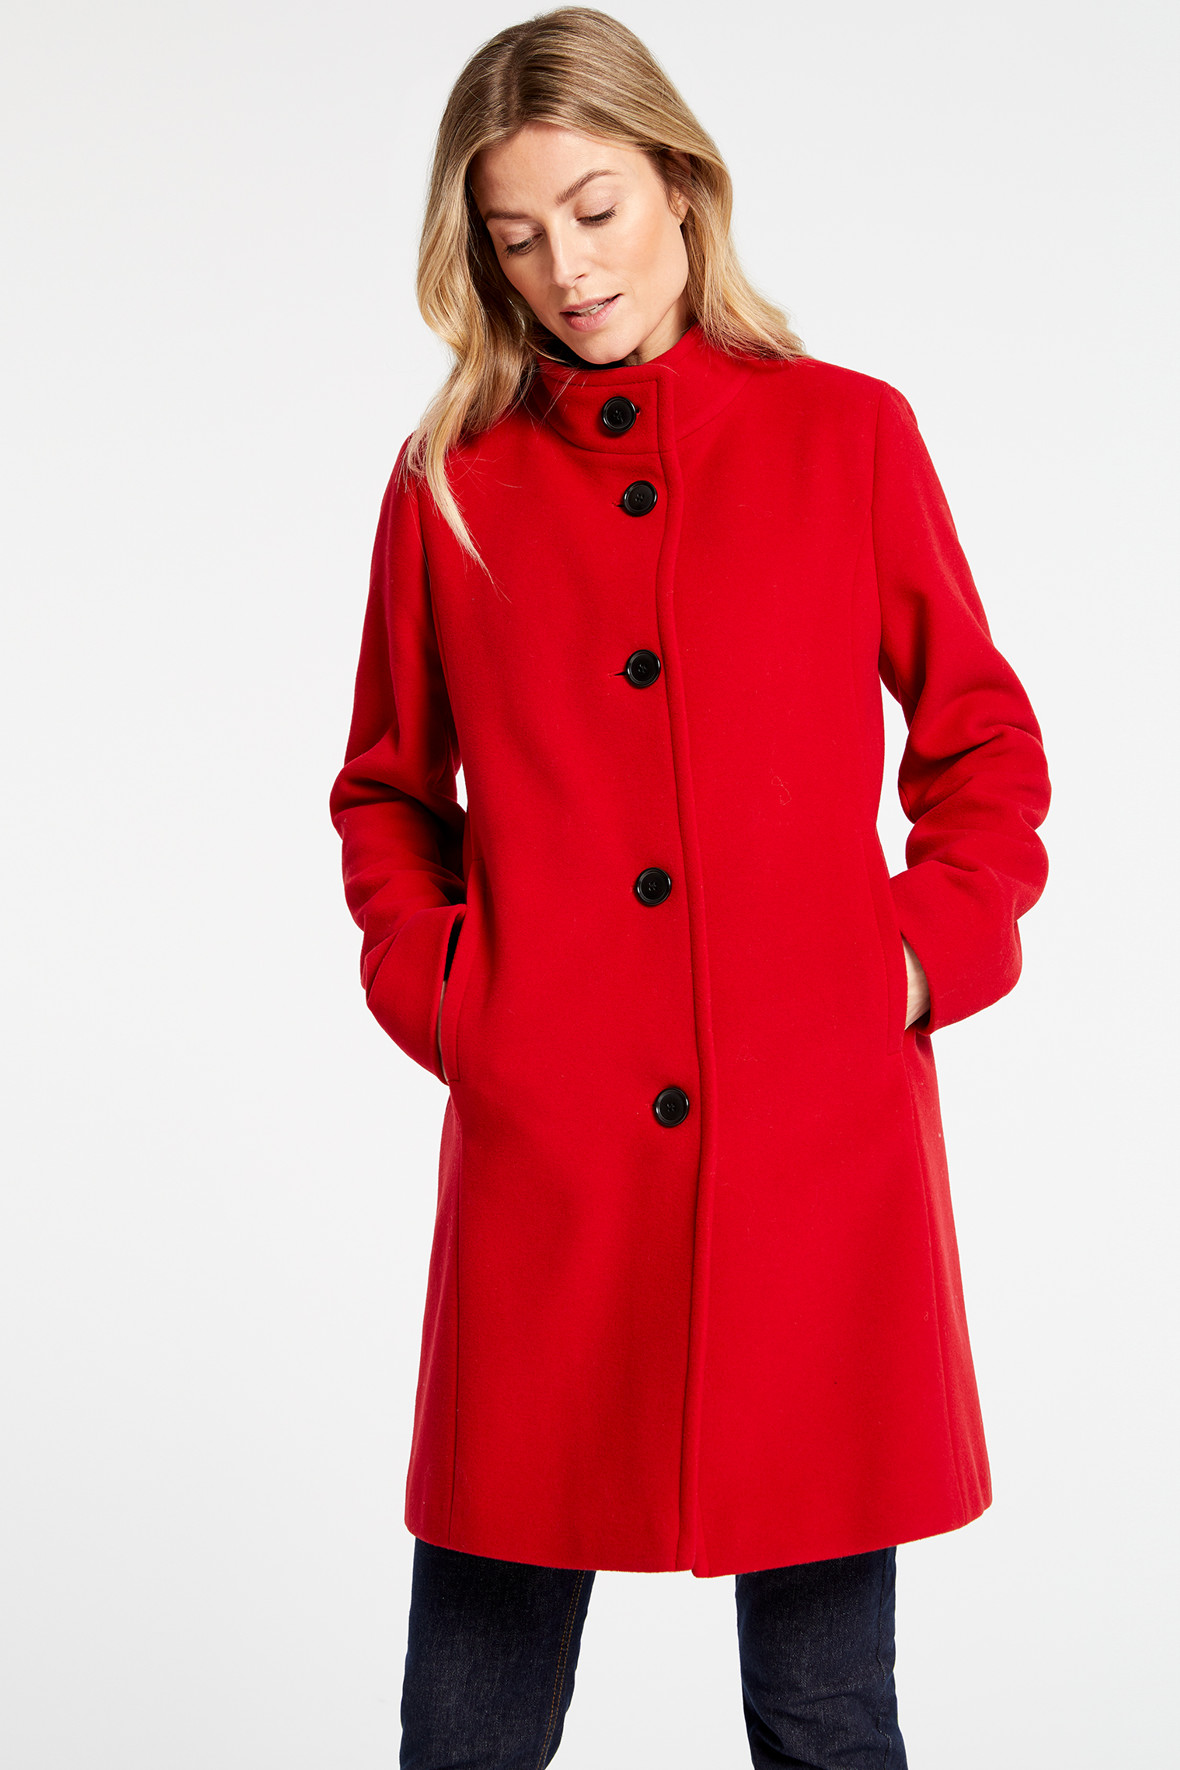 Gerry rød uldfrakke i meget høj kvalitet - italiensk stof - Hos Lohse